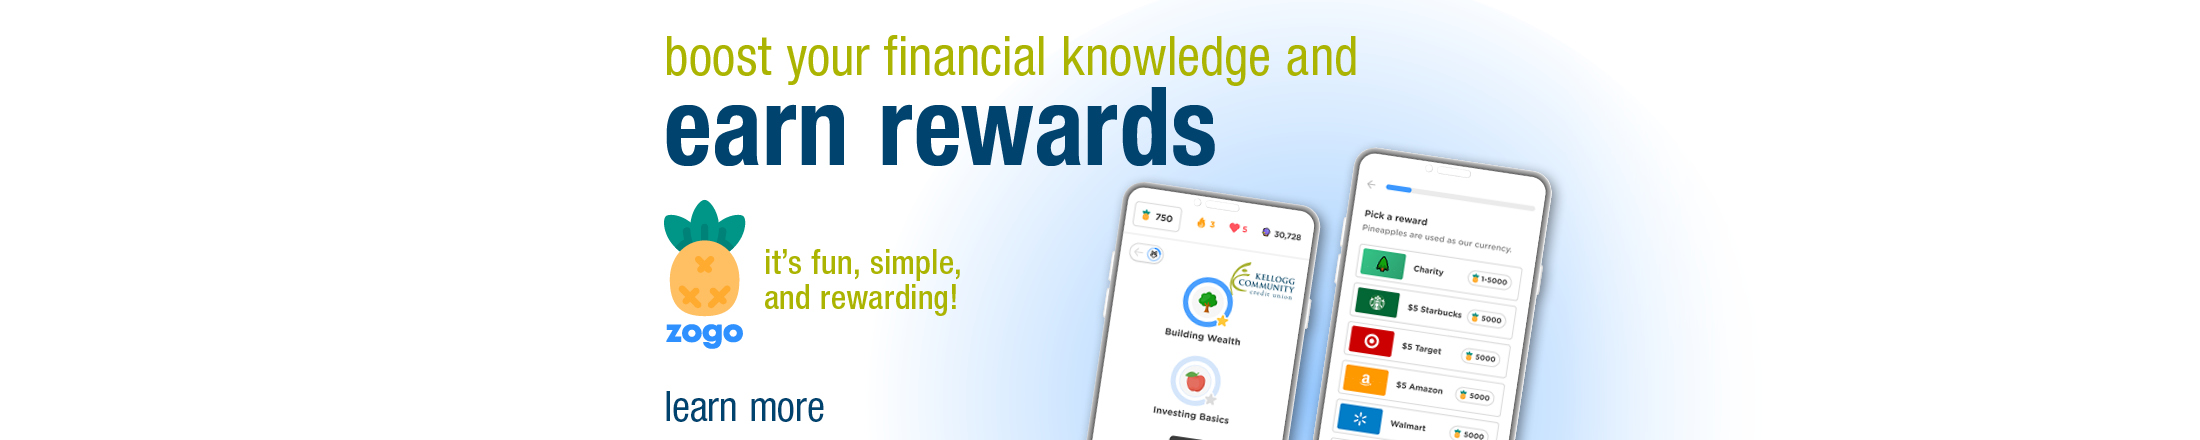 Zogo financial literacy app